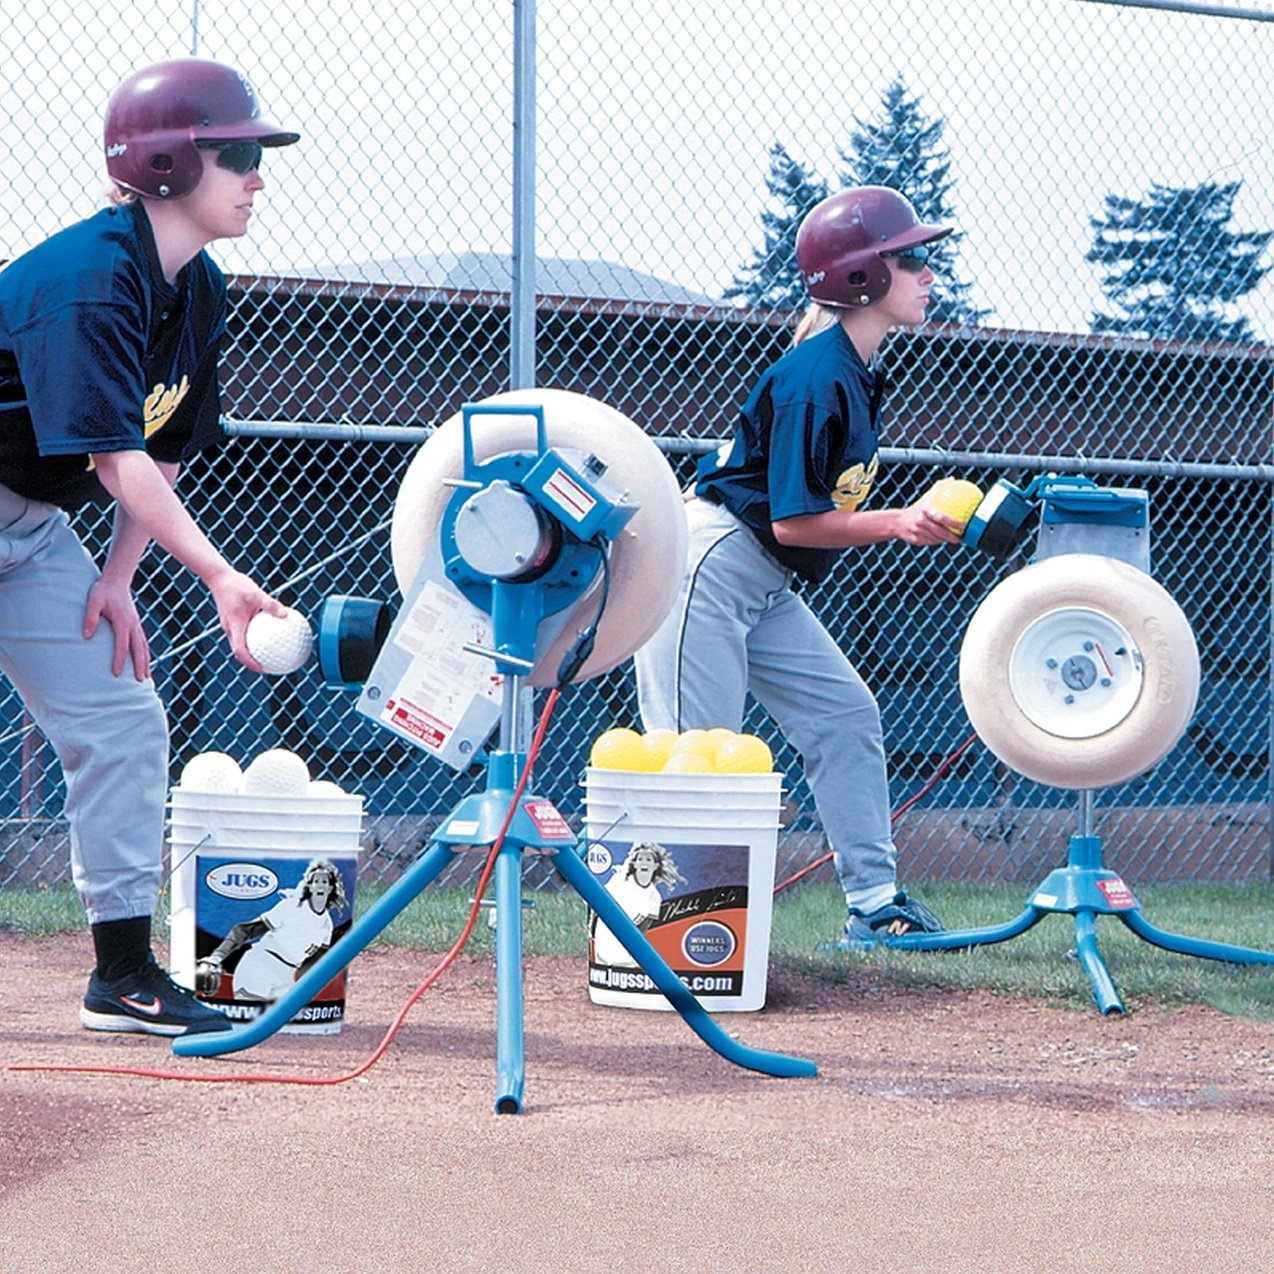 Jugs BP®1 Pitching Machine for Baseball or Softball